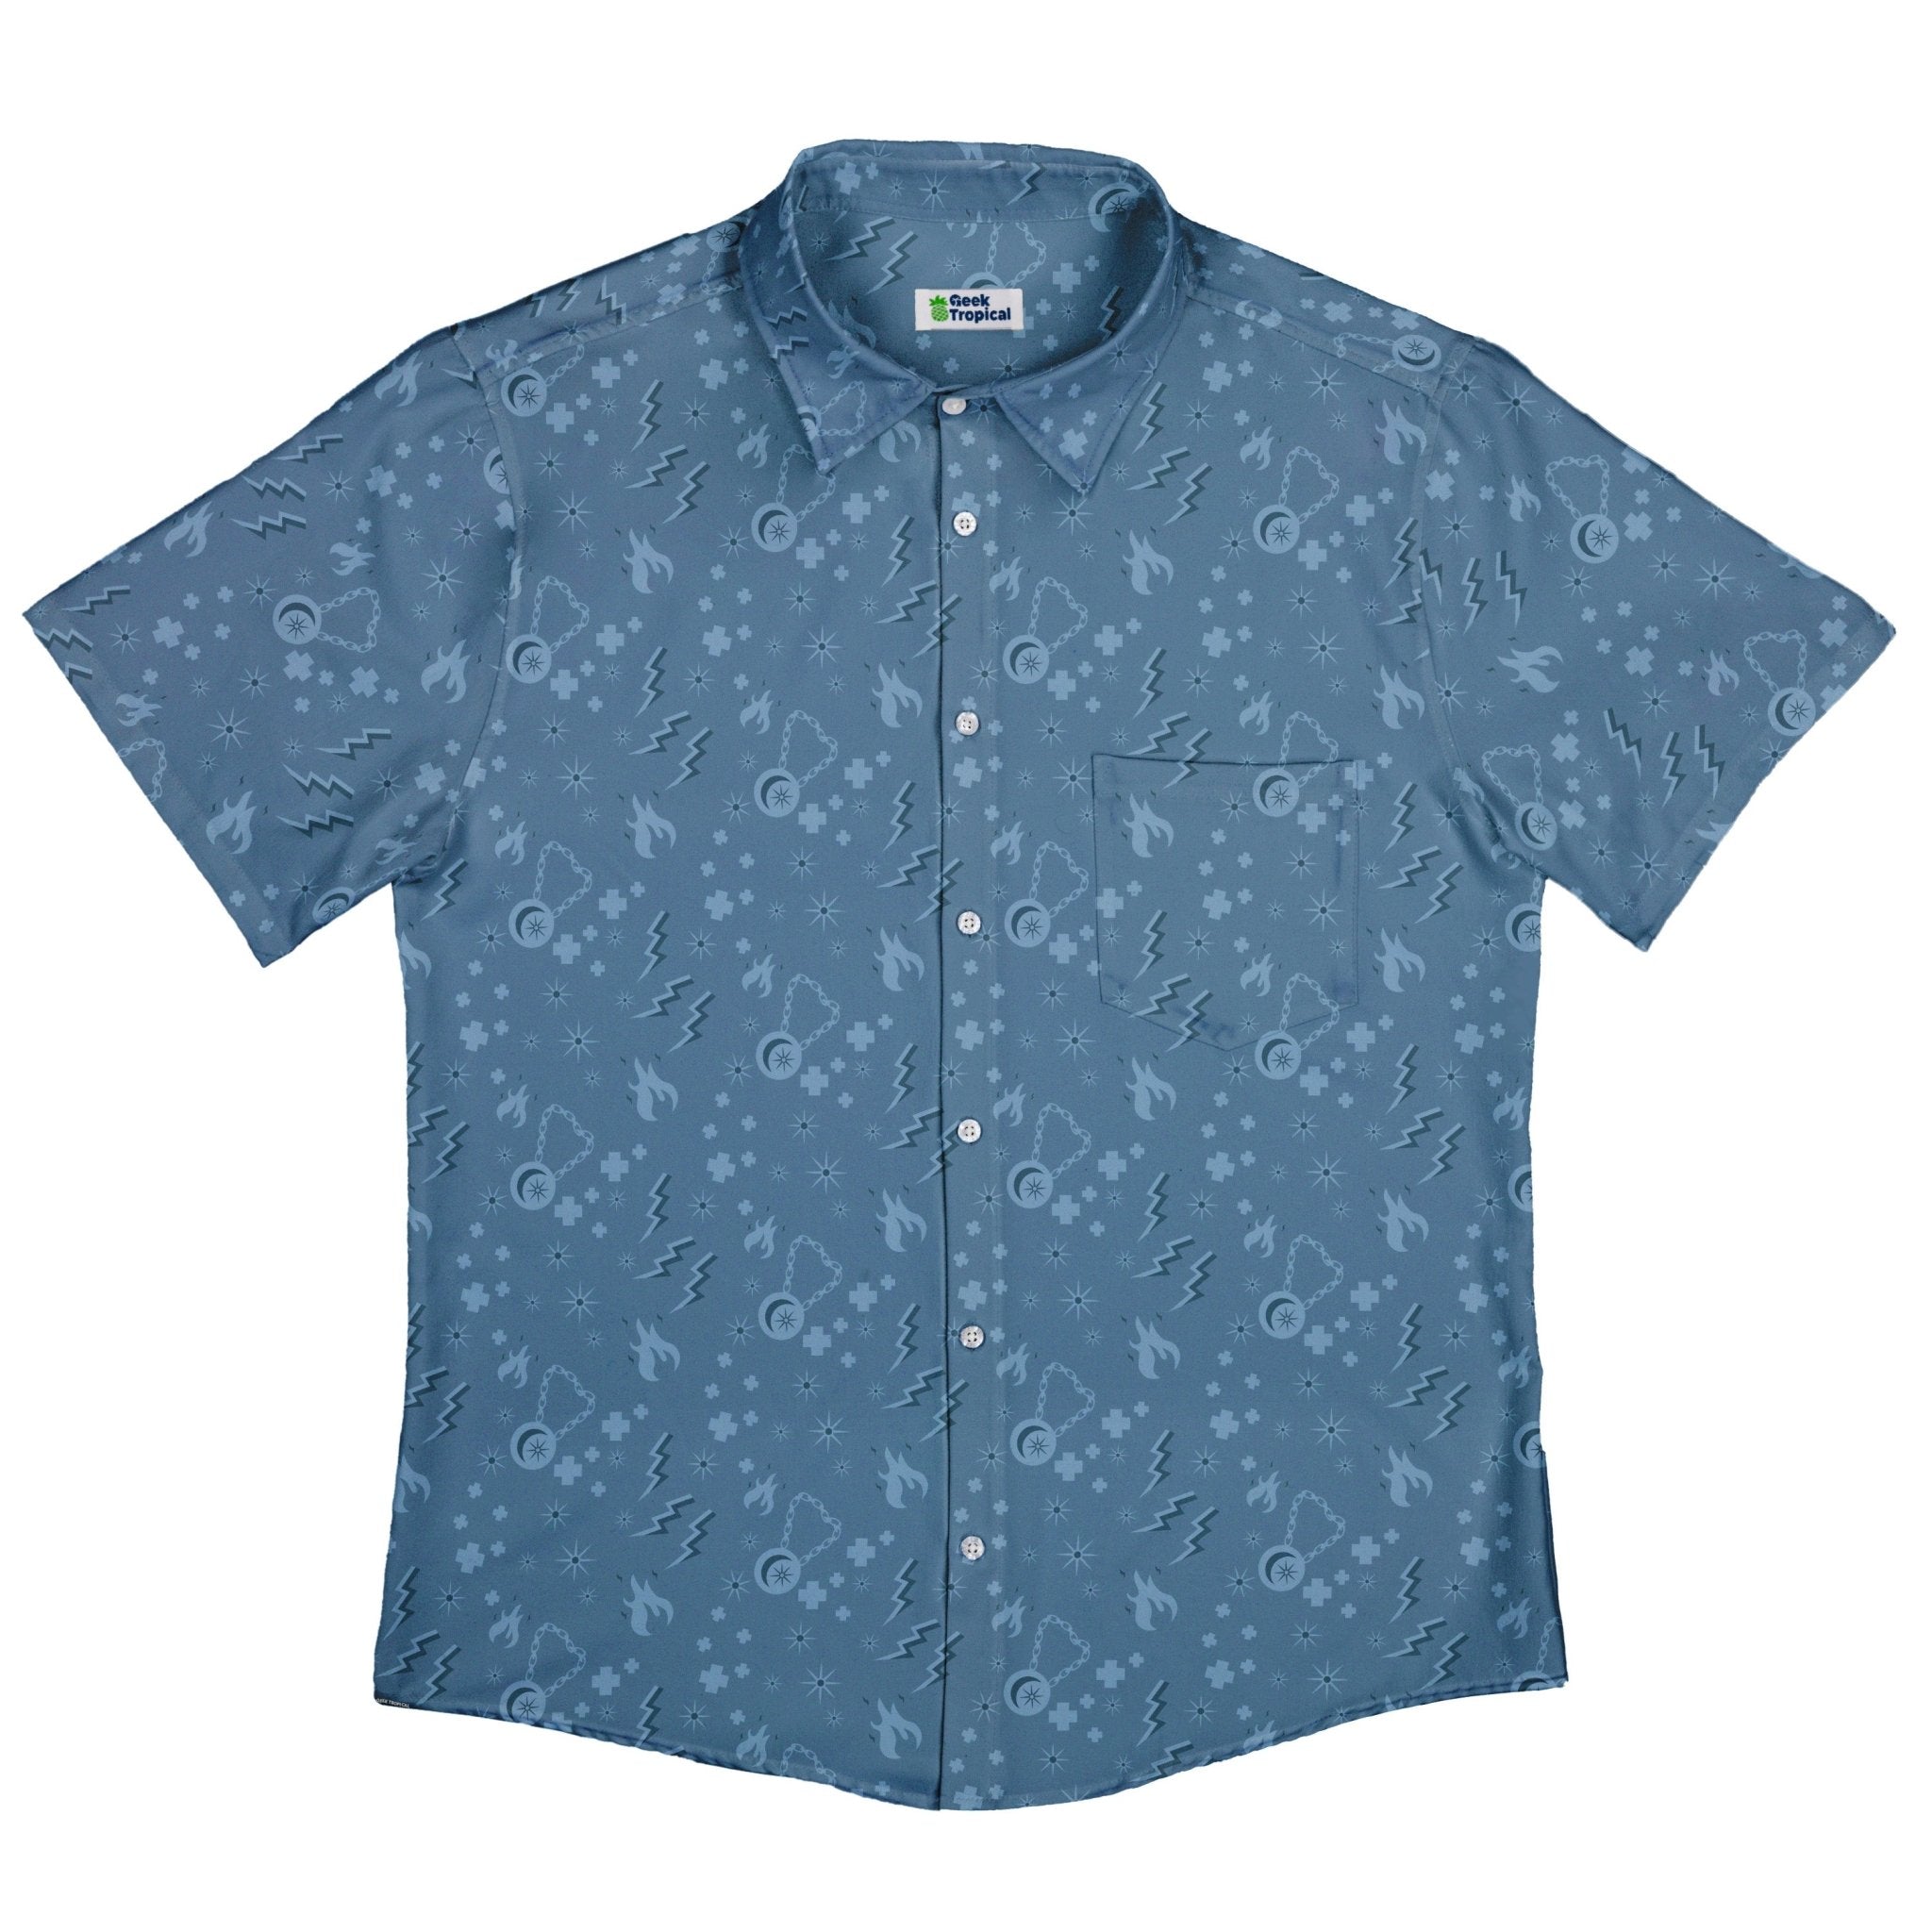 Dnd Cleric Class Button Up Shirt - adult sizing - Design by Heather Davenport - dnd & rpg print